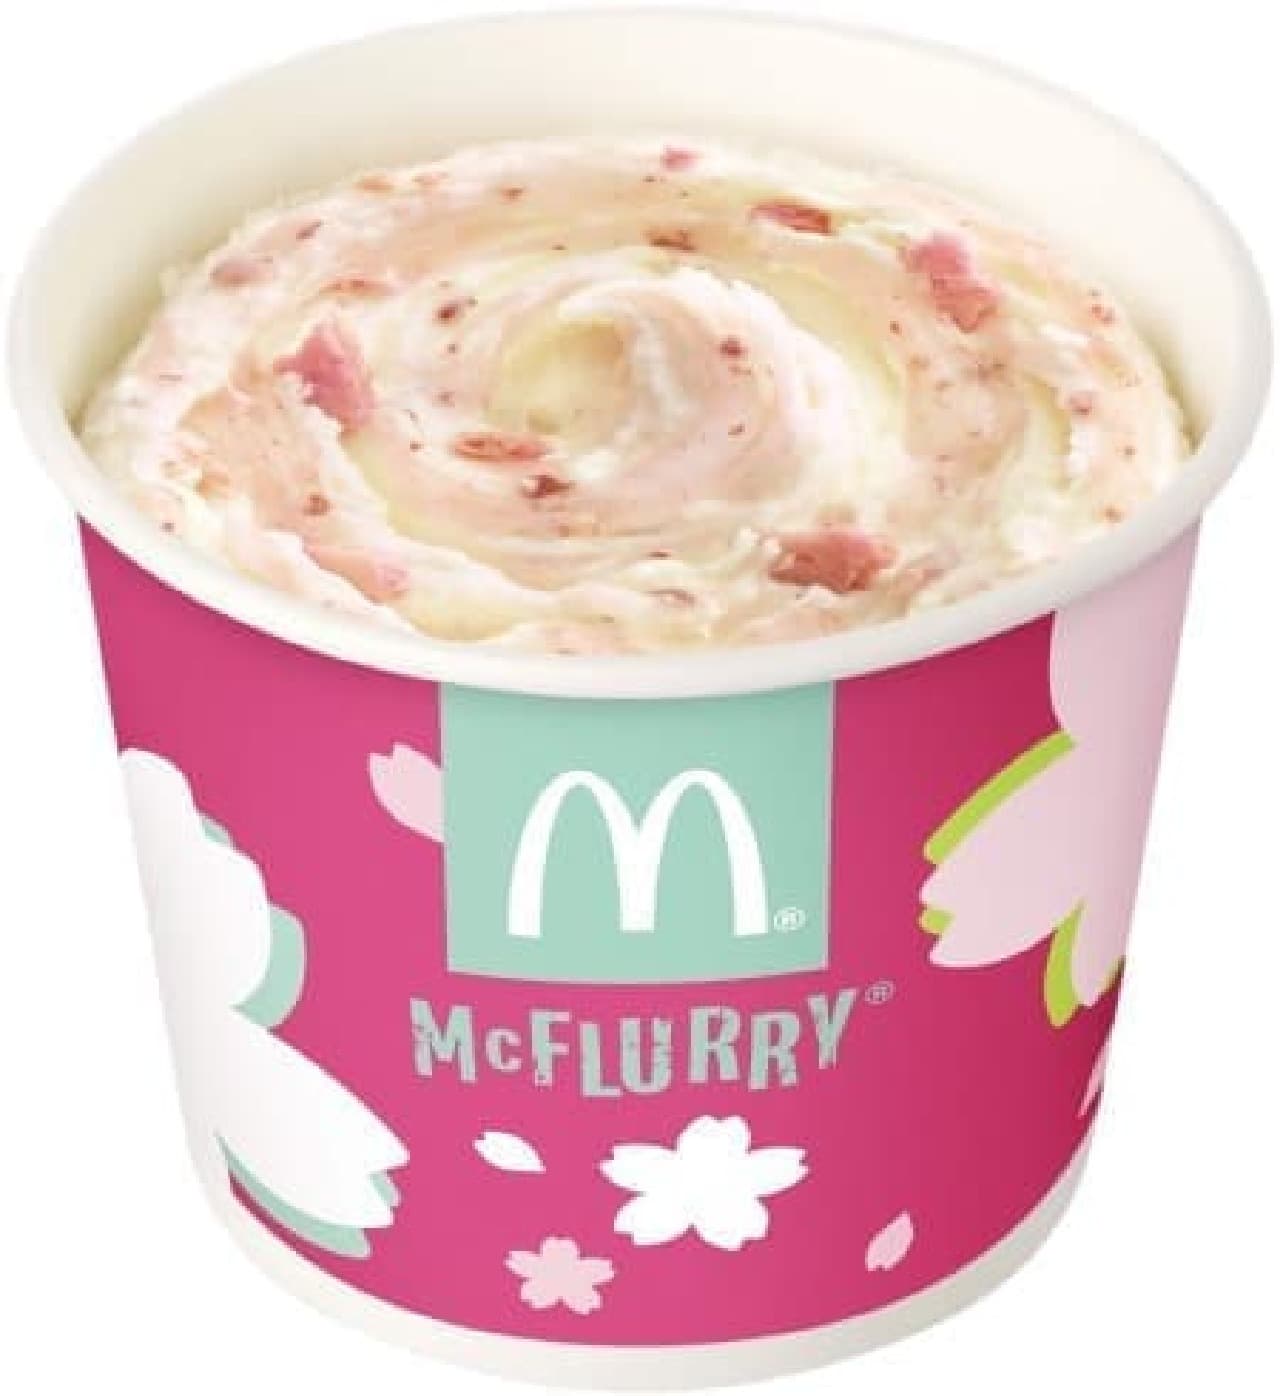 McDonald's "McFleury Crispy Sakura"